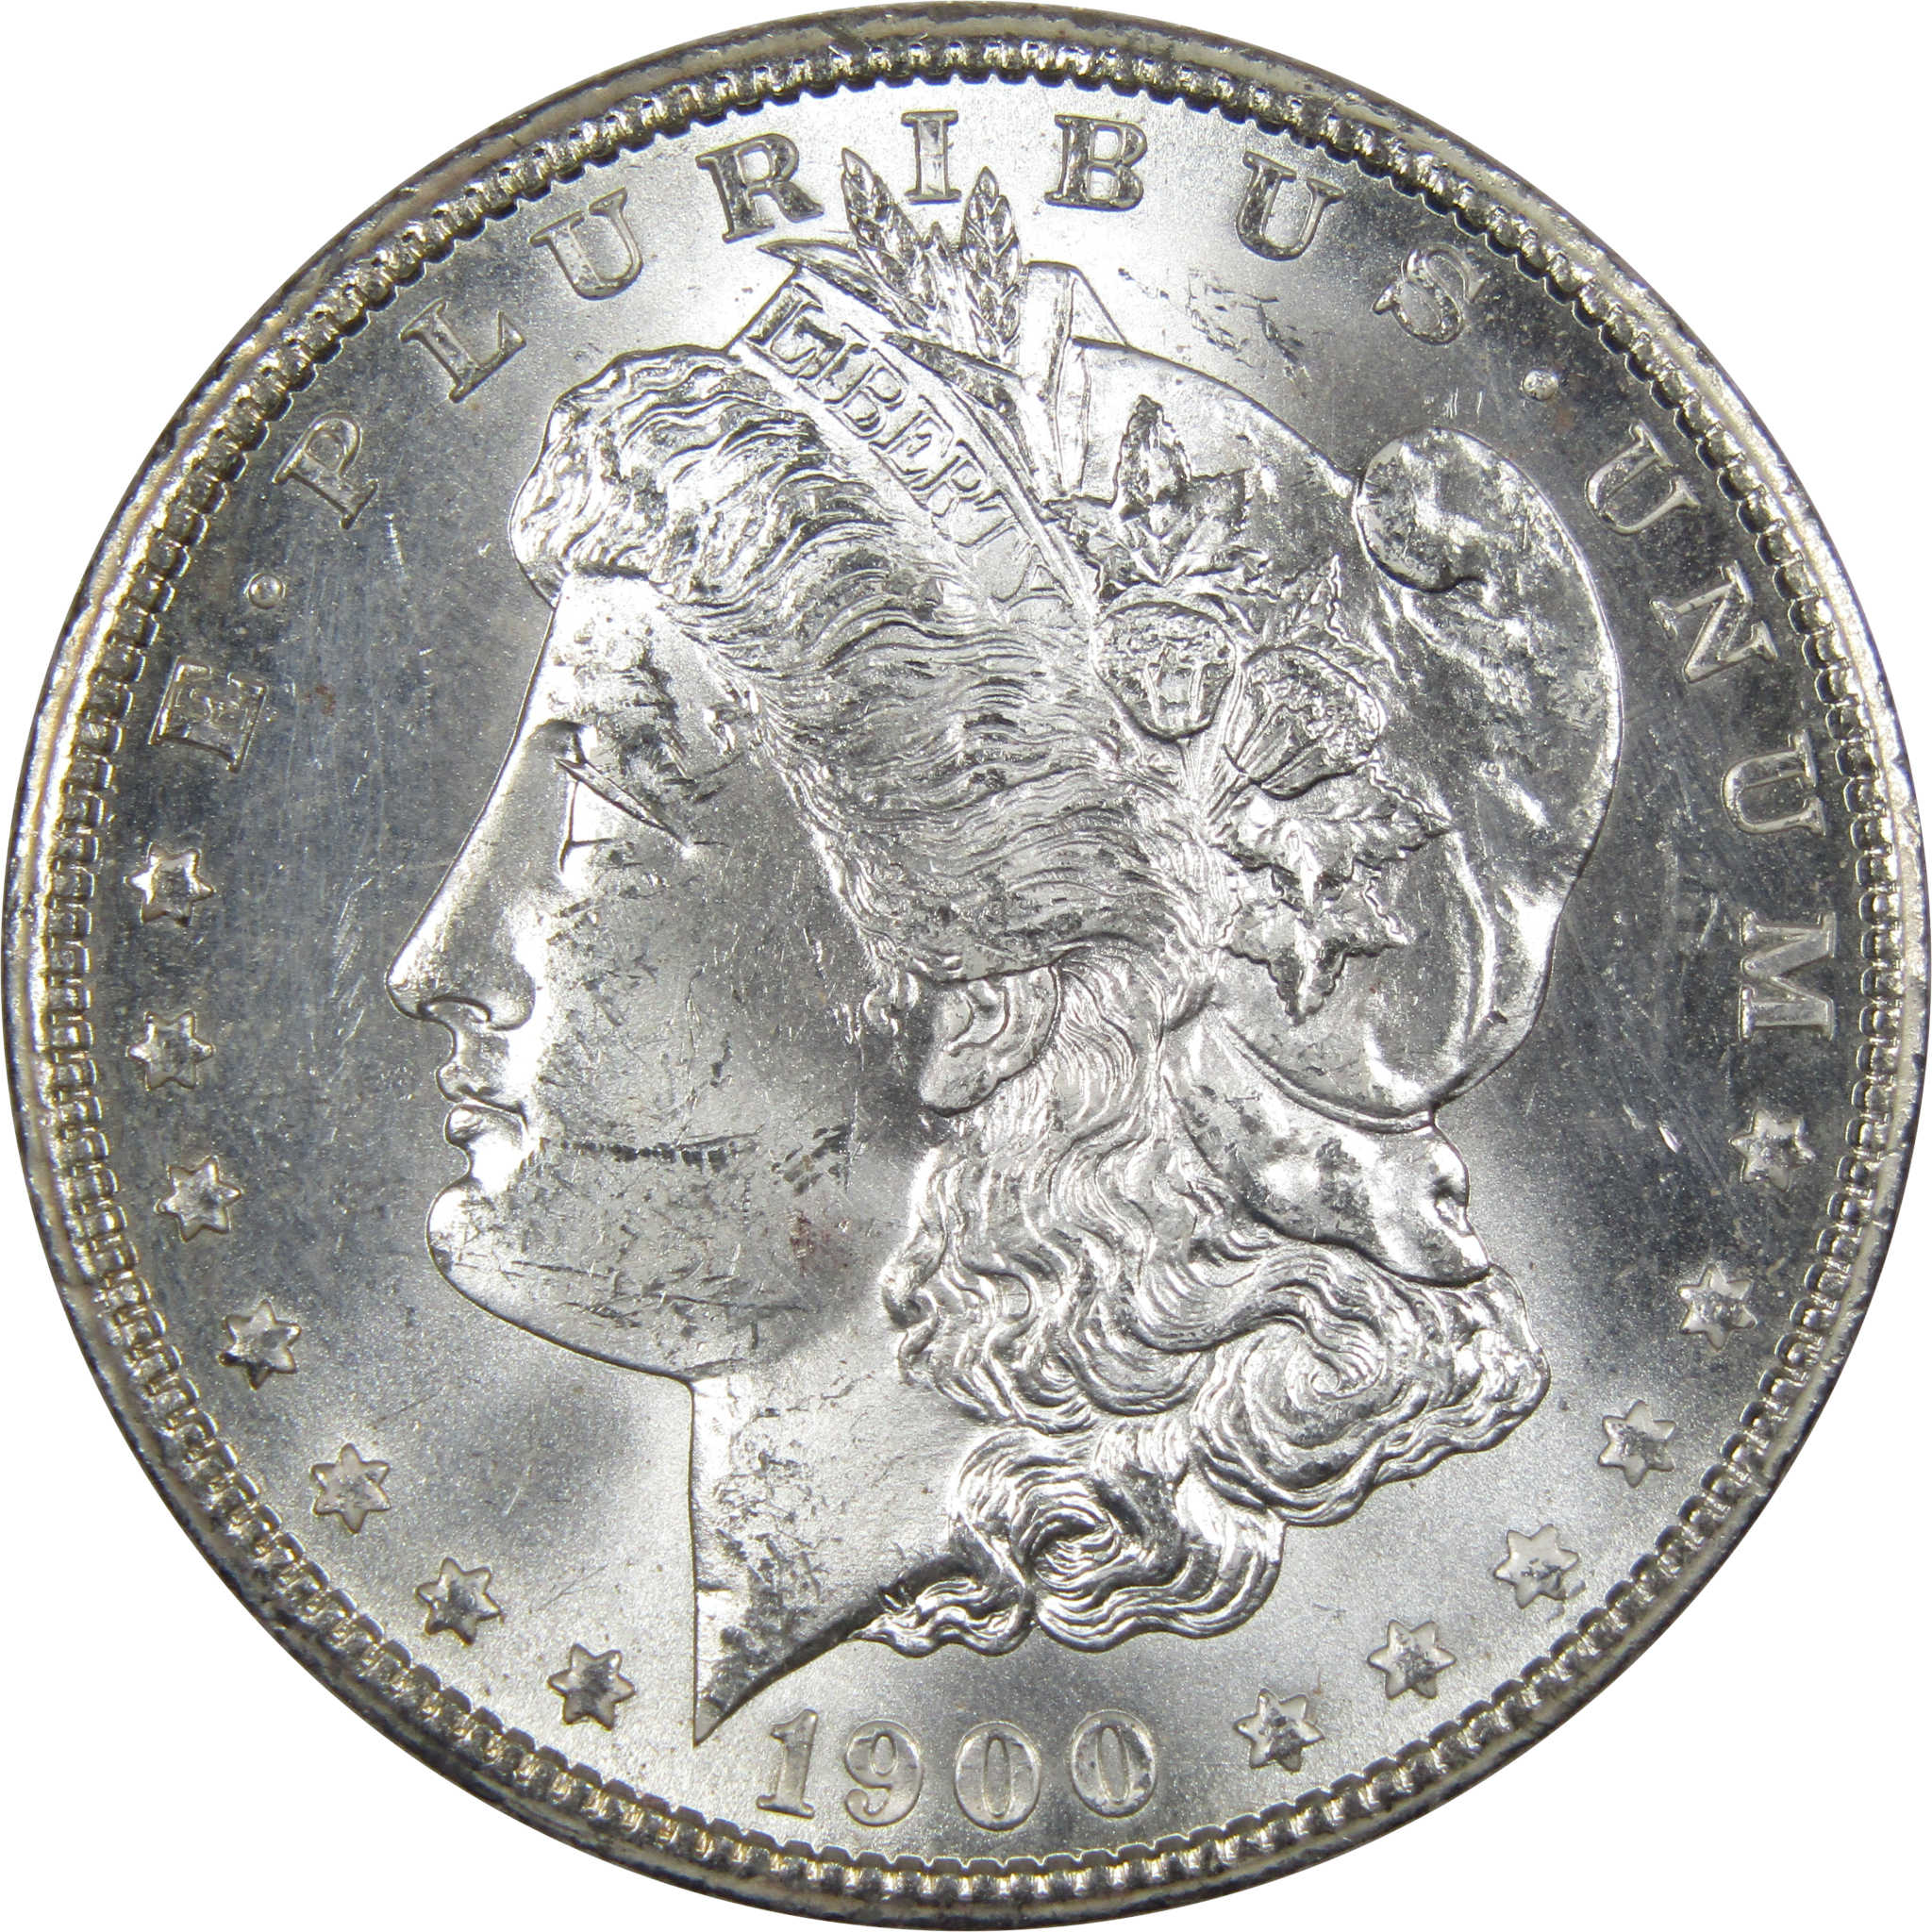 1900 O Morgan Dollar BU Uncirculated Mint State 90% Silver SKU:IPC9797 - Morgan coin - Morgan silver dollar - Morgan silver dollar for sale - Profile Coins &amp; Collectibles